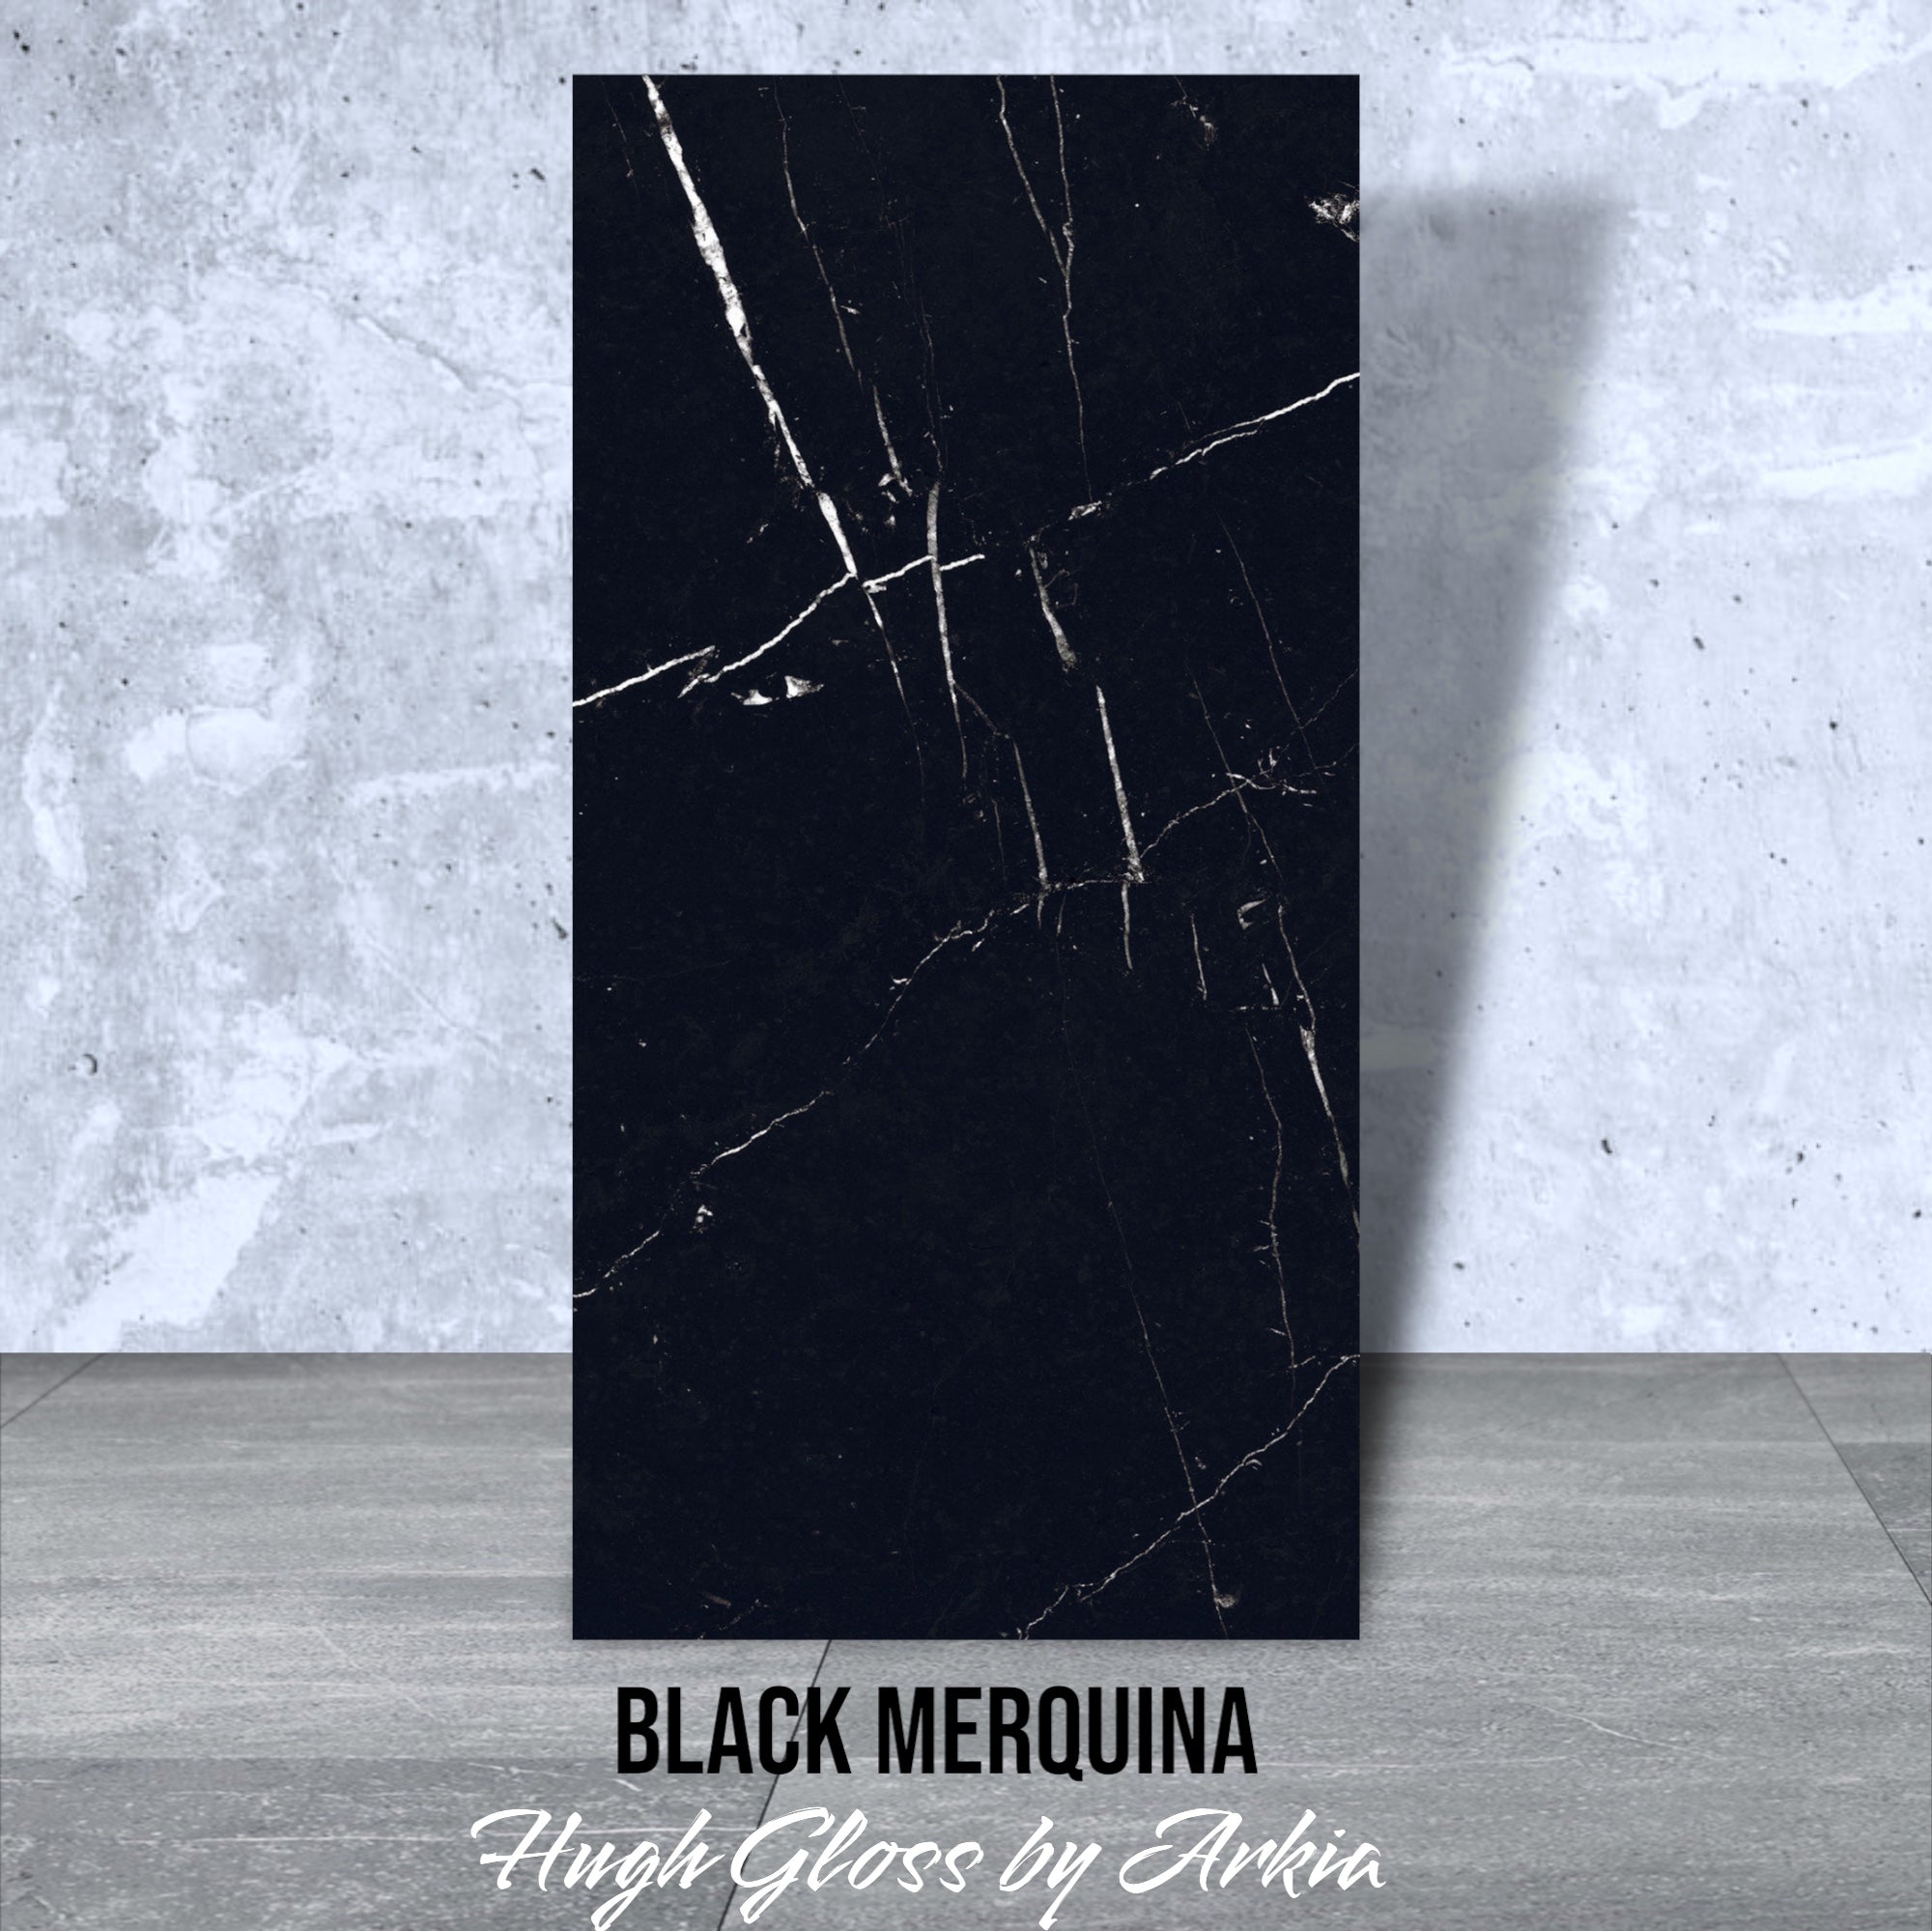 Black Merquina